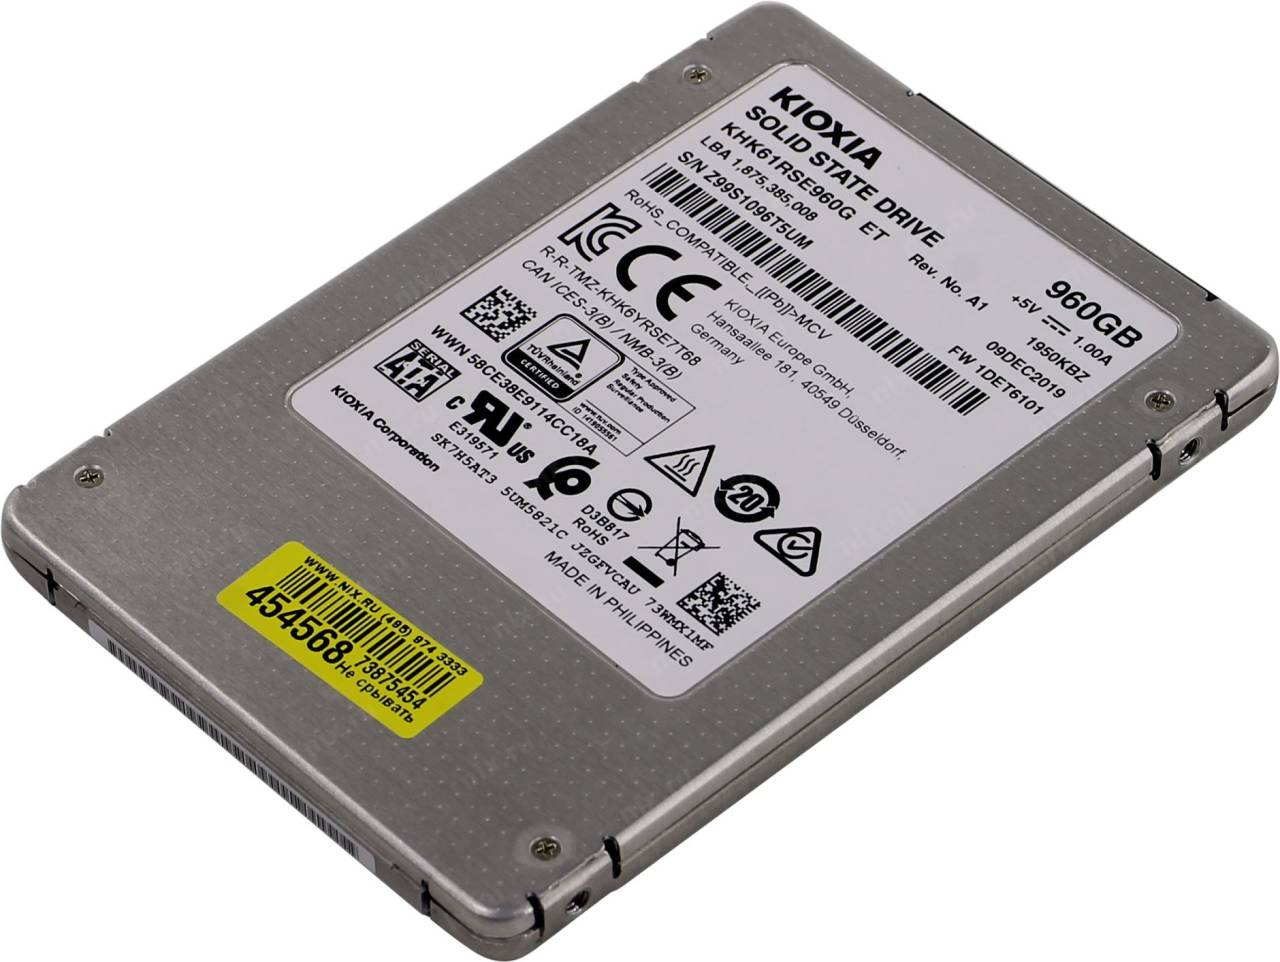   SSD 960 Gb SATA-III Toshiba KIOXIA HK6-R [KHK61RSE960G] 2.5 3D TLC